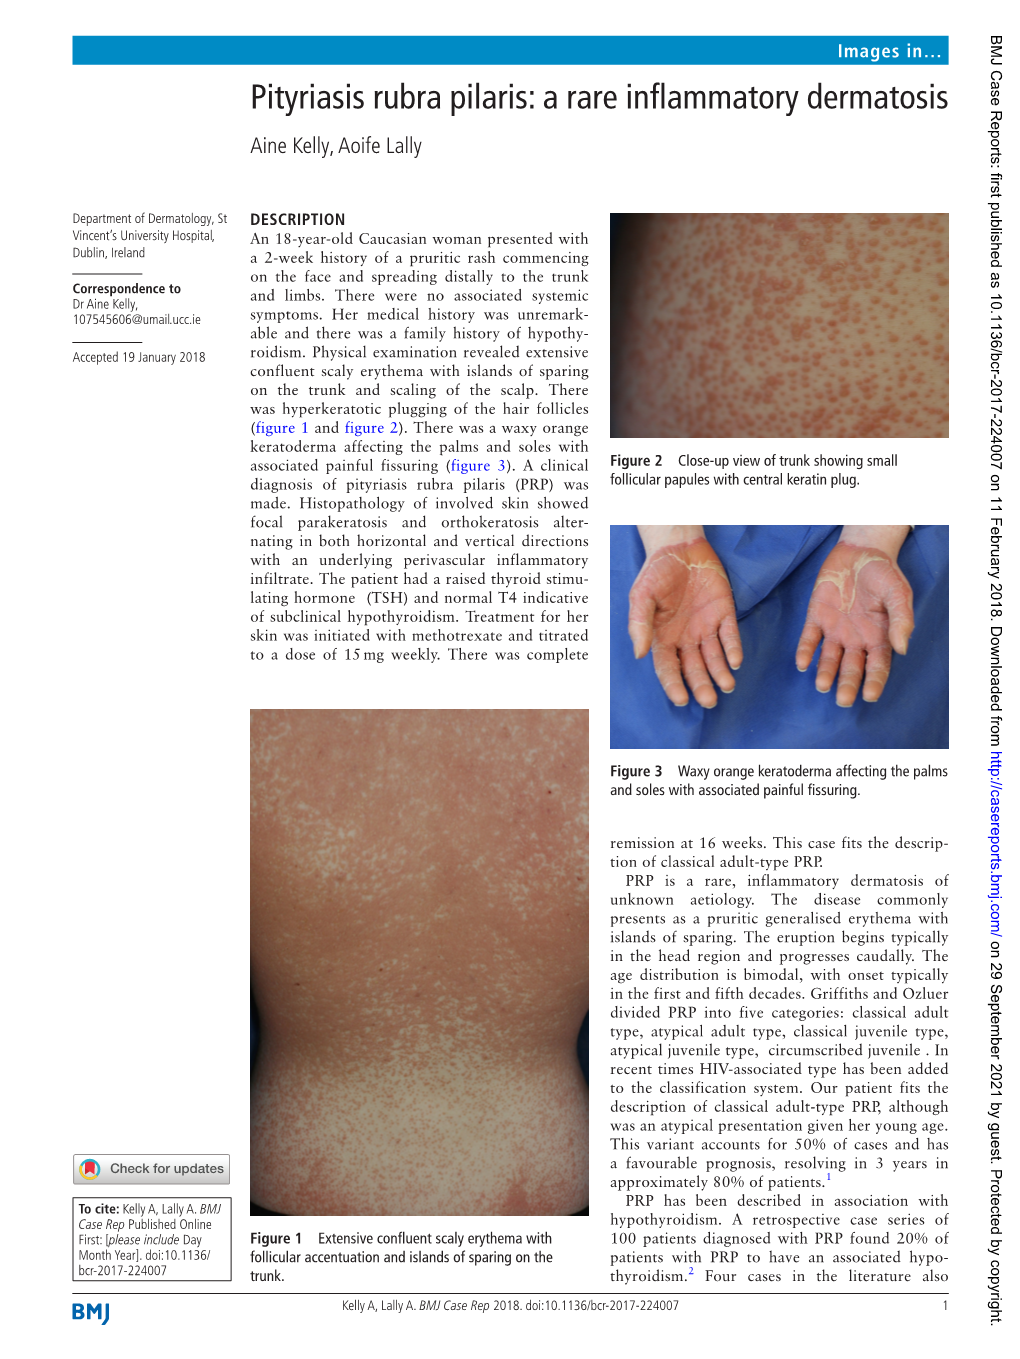 Pityriasis Rubra Pilaris: a Rare Inflammatory Dermatosis Aine Kelly, Aoife Lally